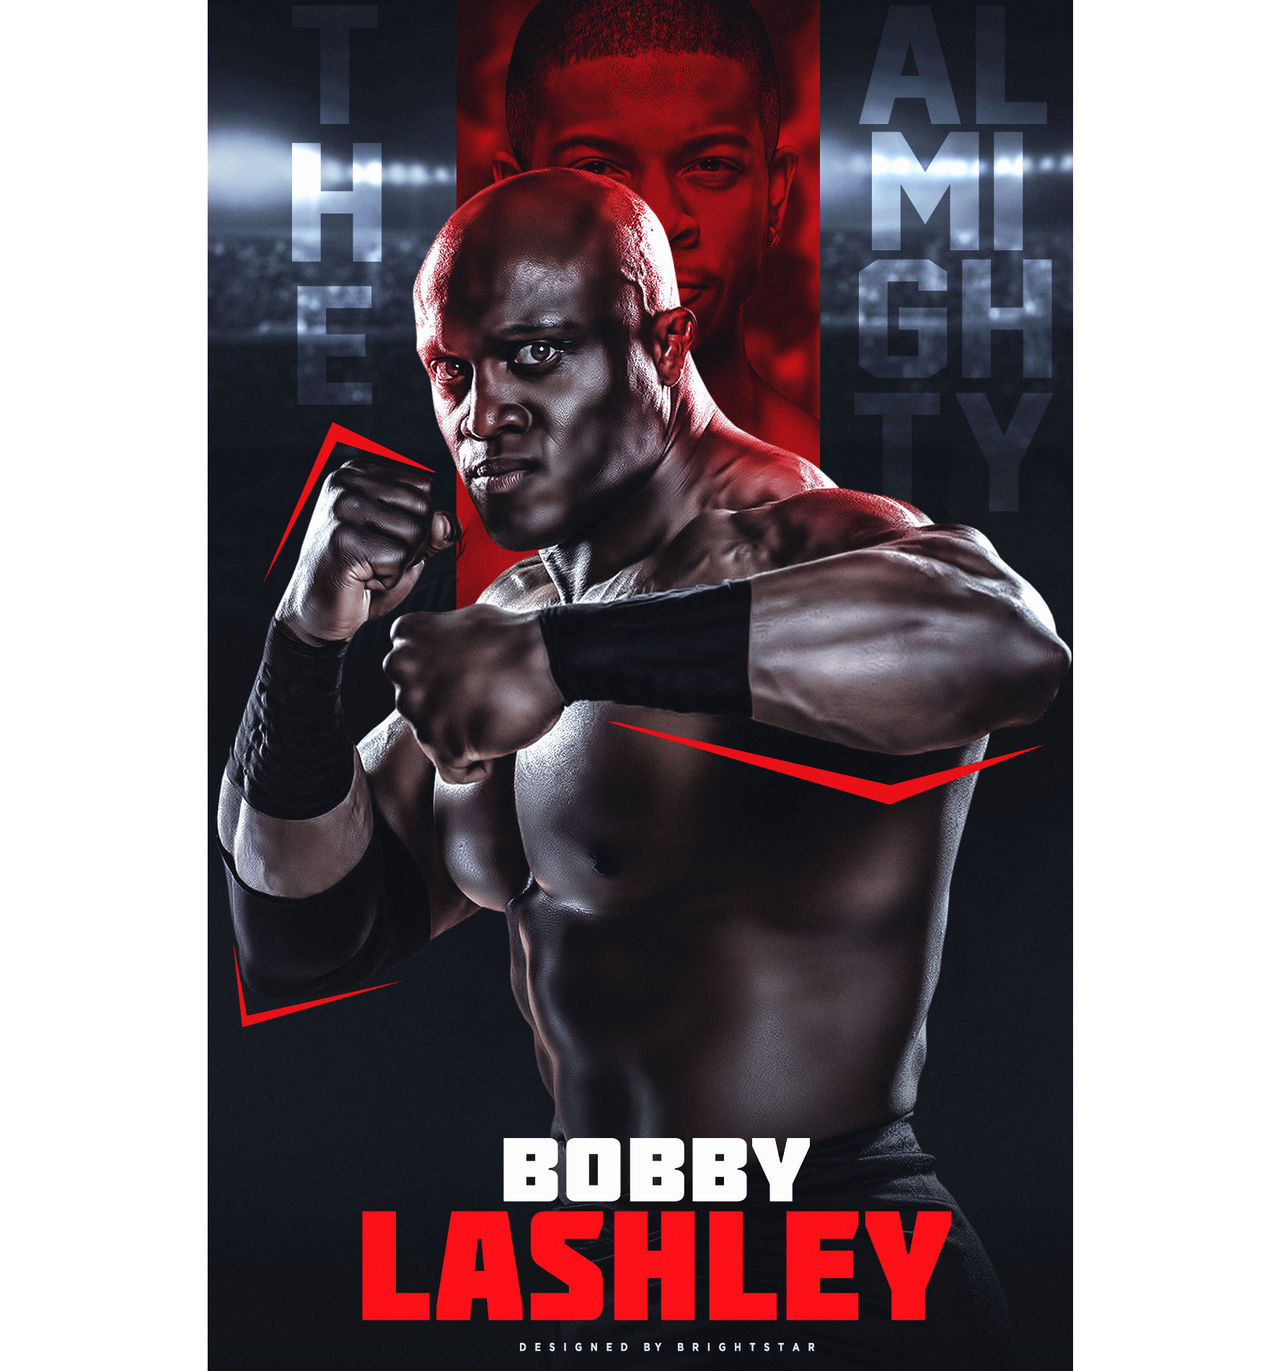 Bobby Lashley   The Almighty by Brightstar2003 1280x1371